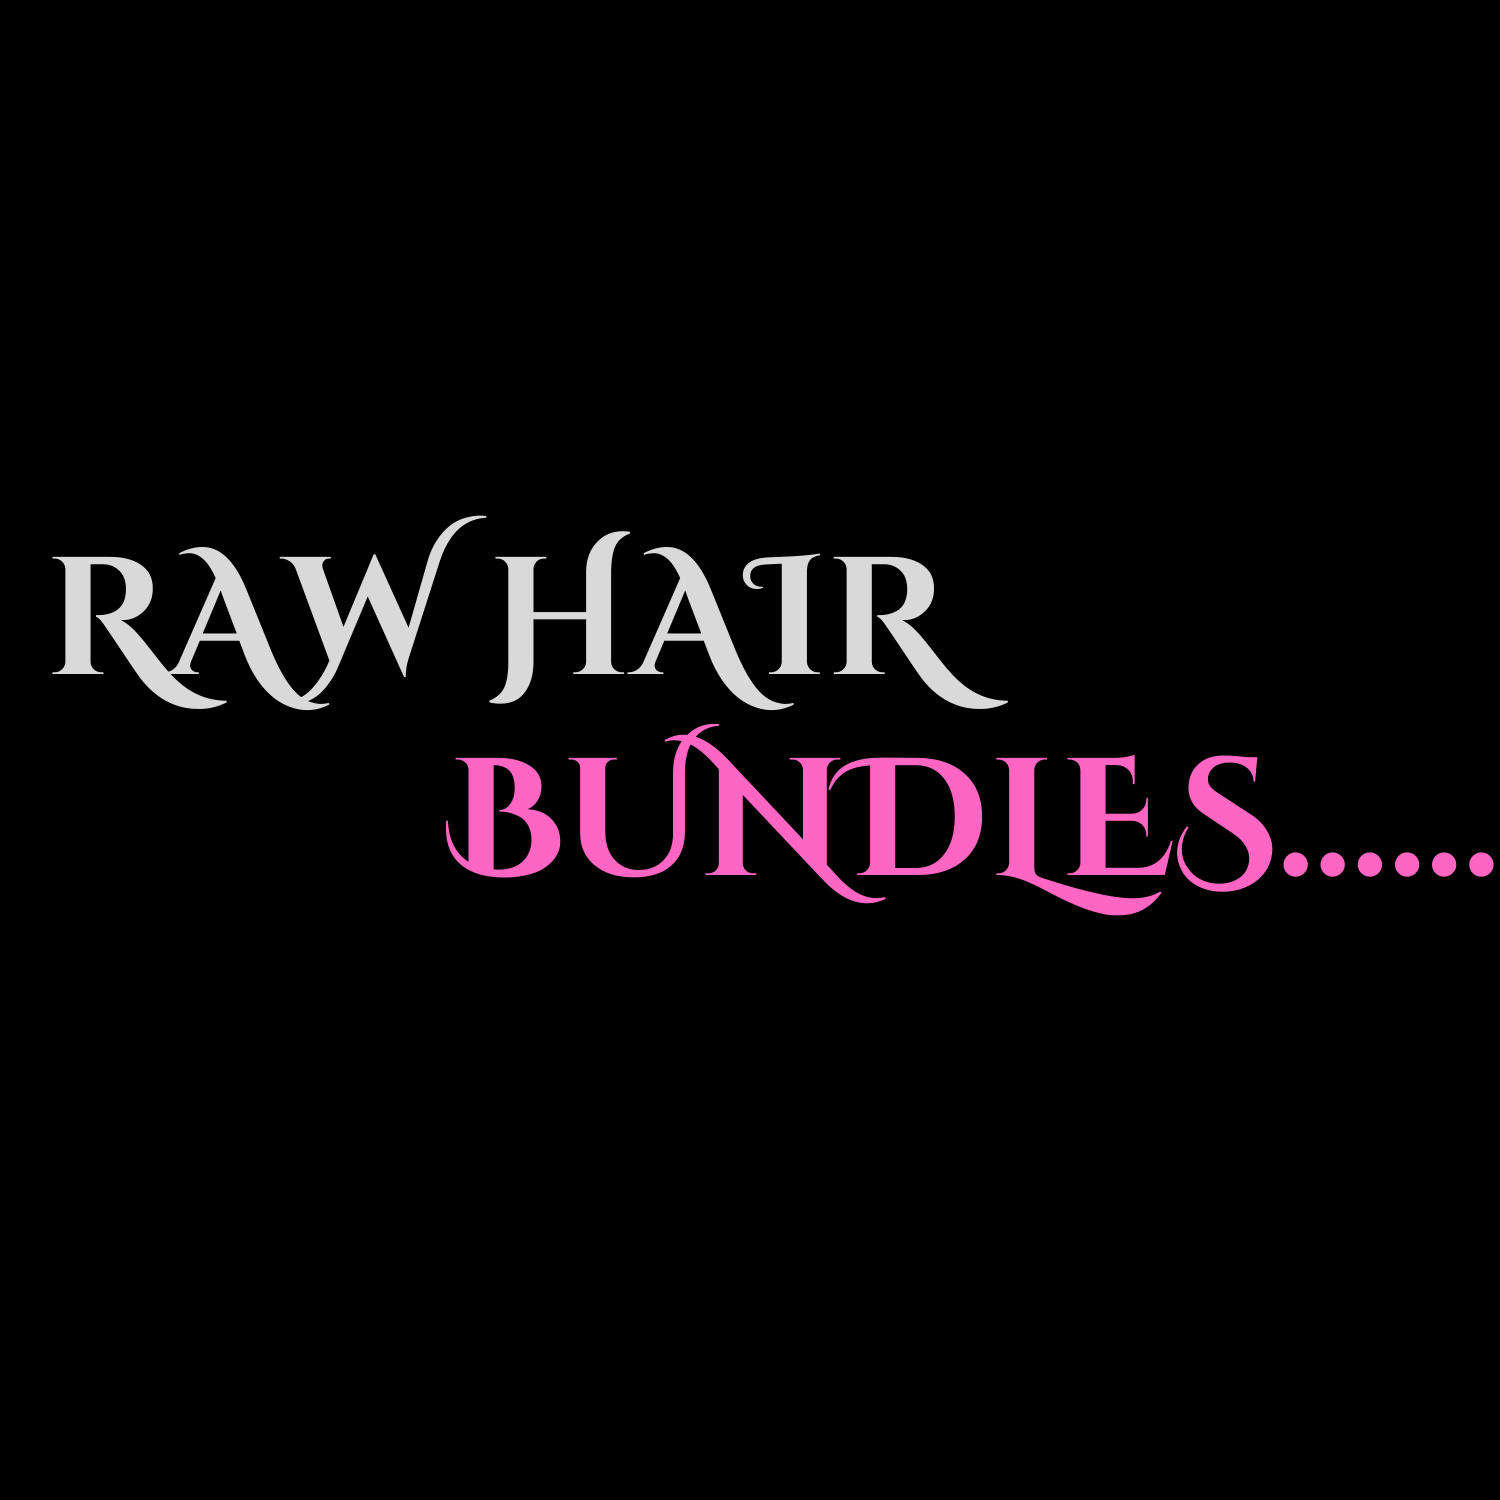 RAW HAIR BUNDLES